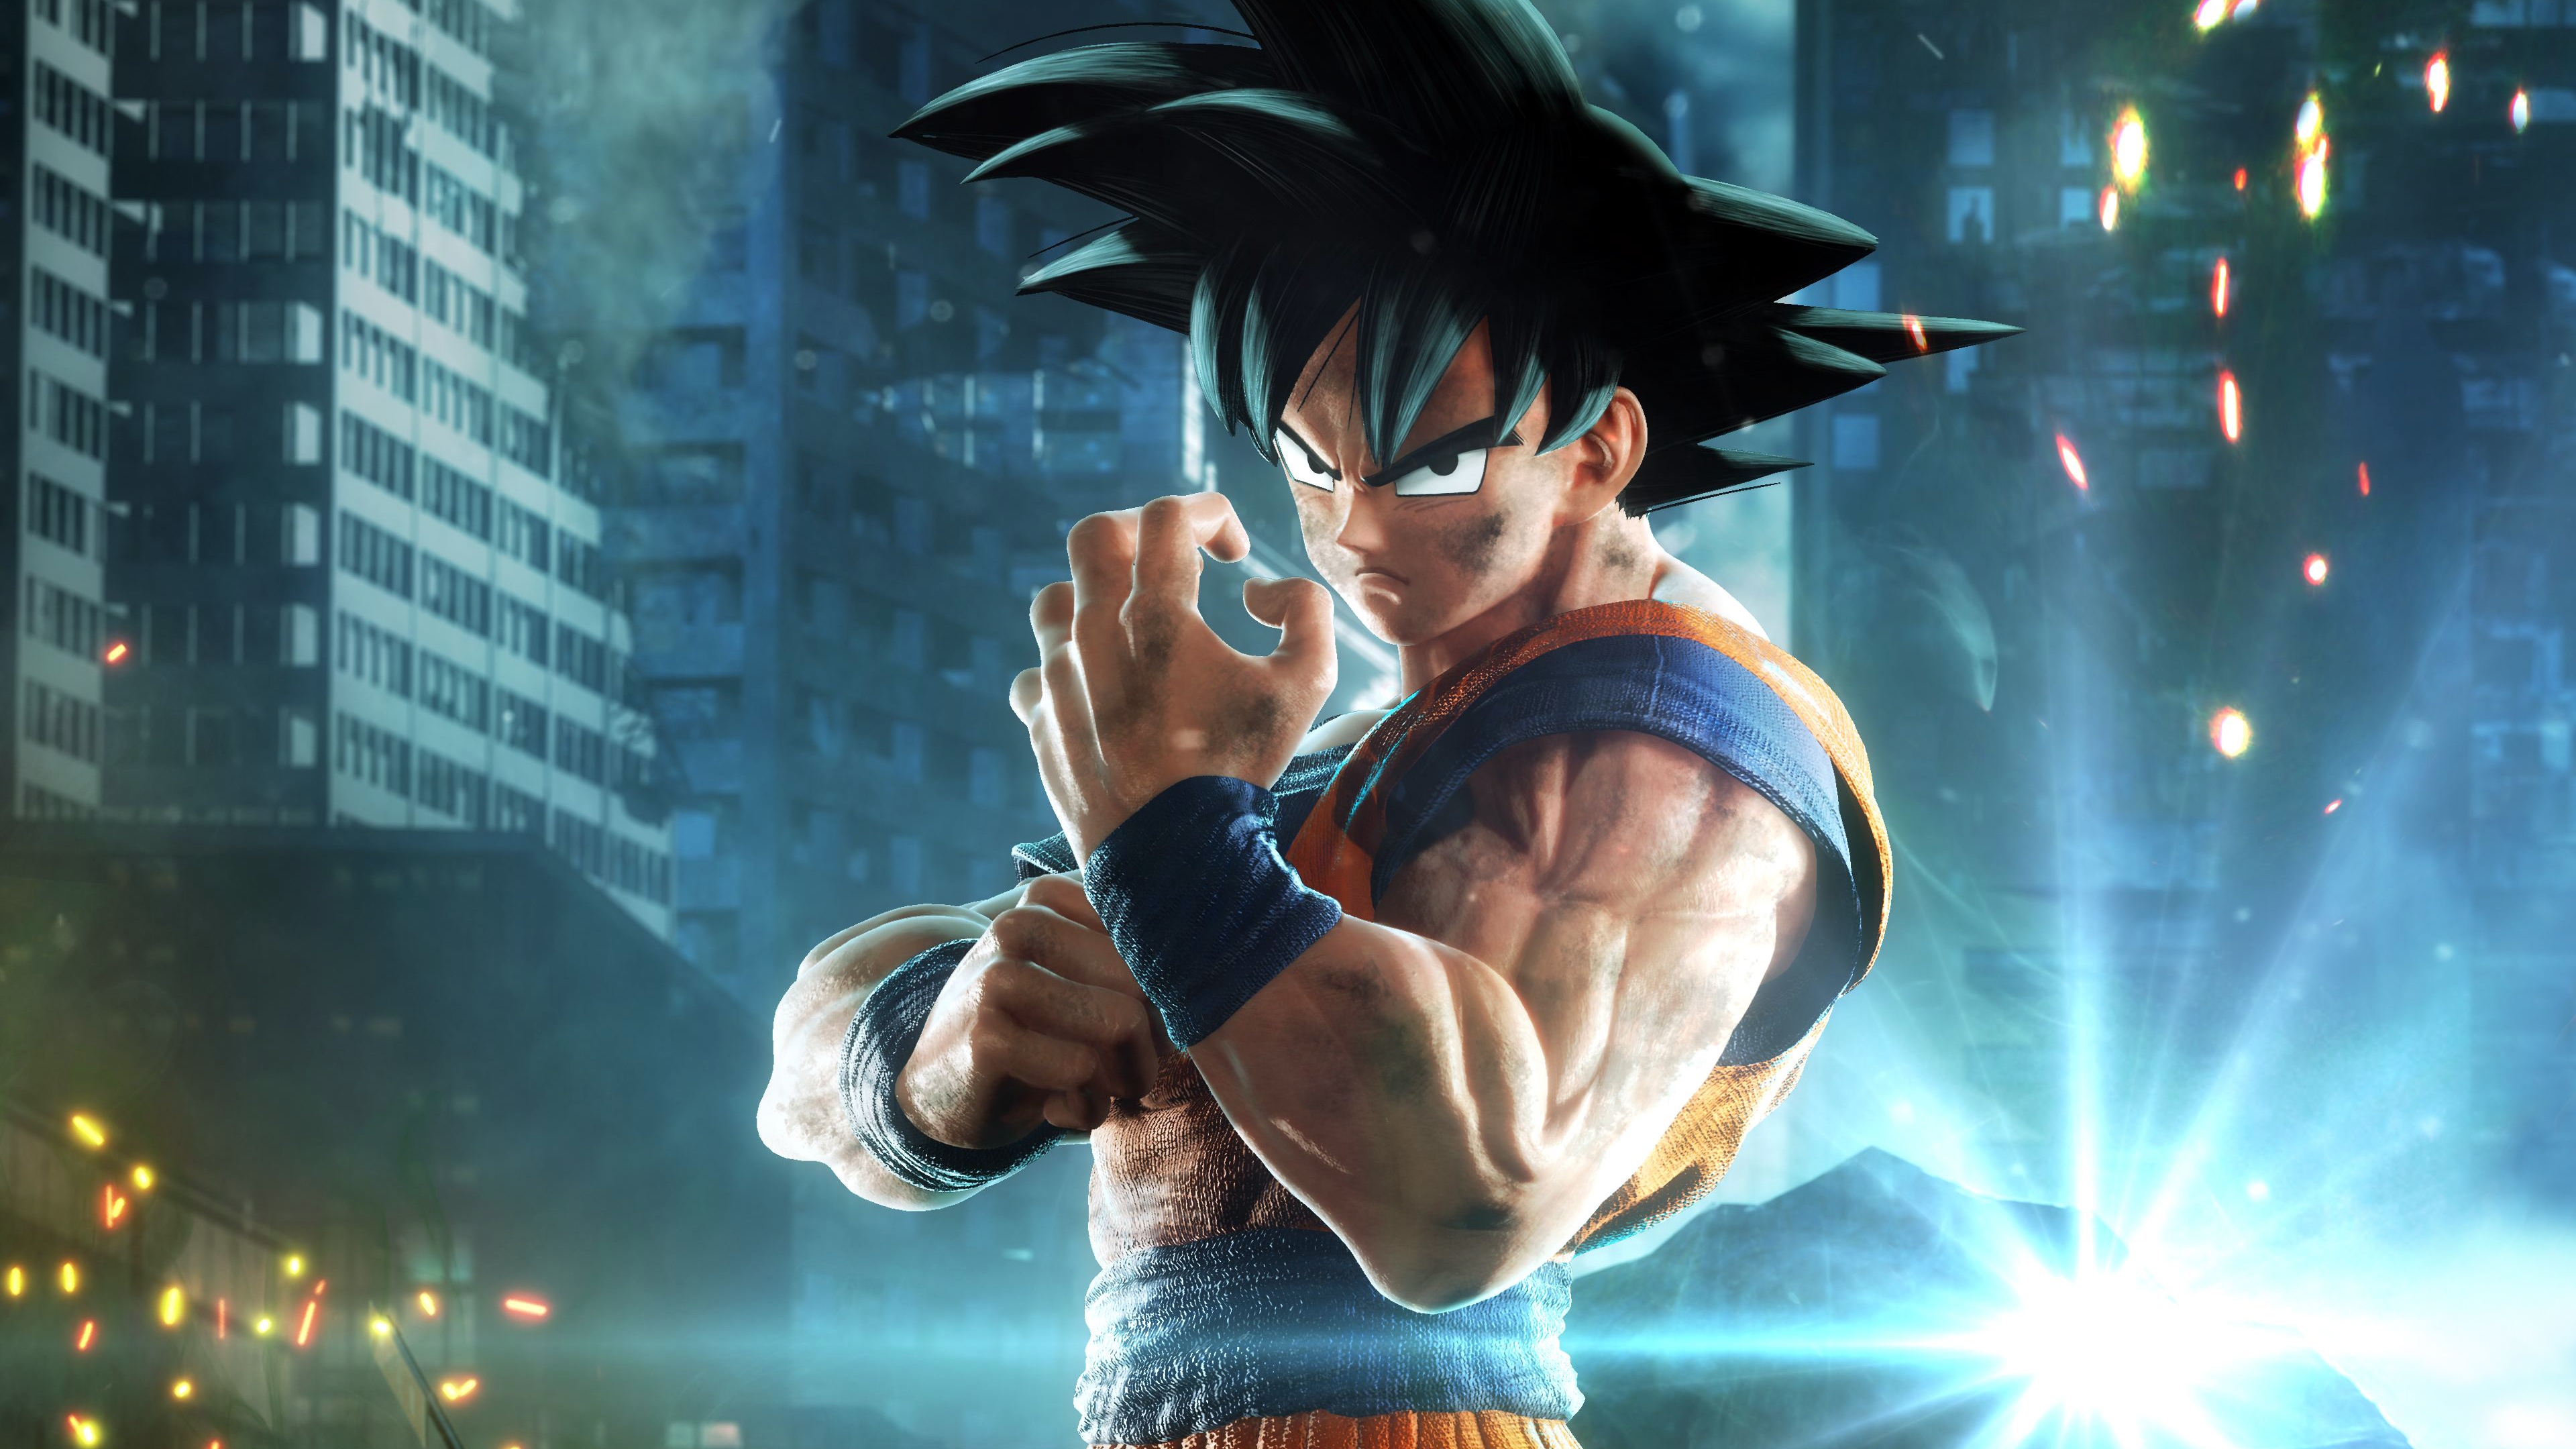 4K Goku Wallpaper and Background Image